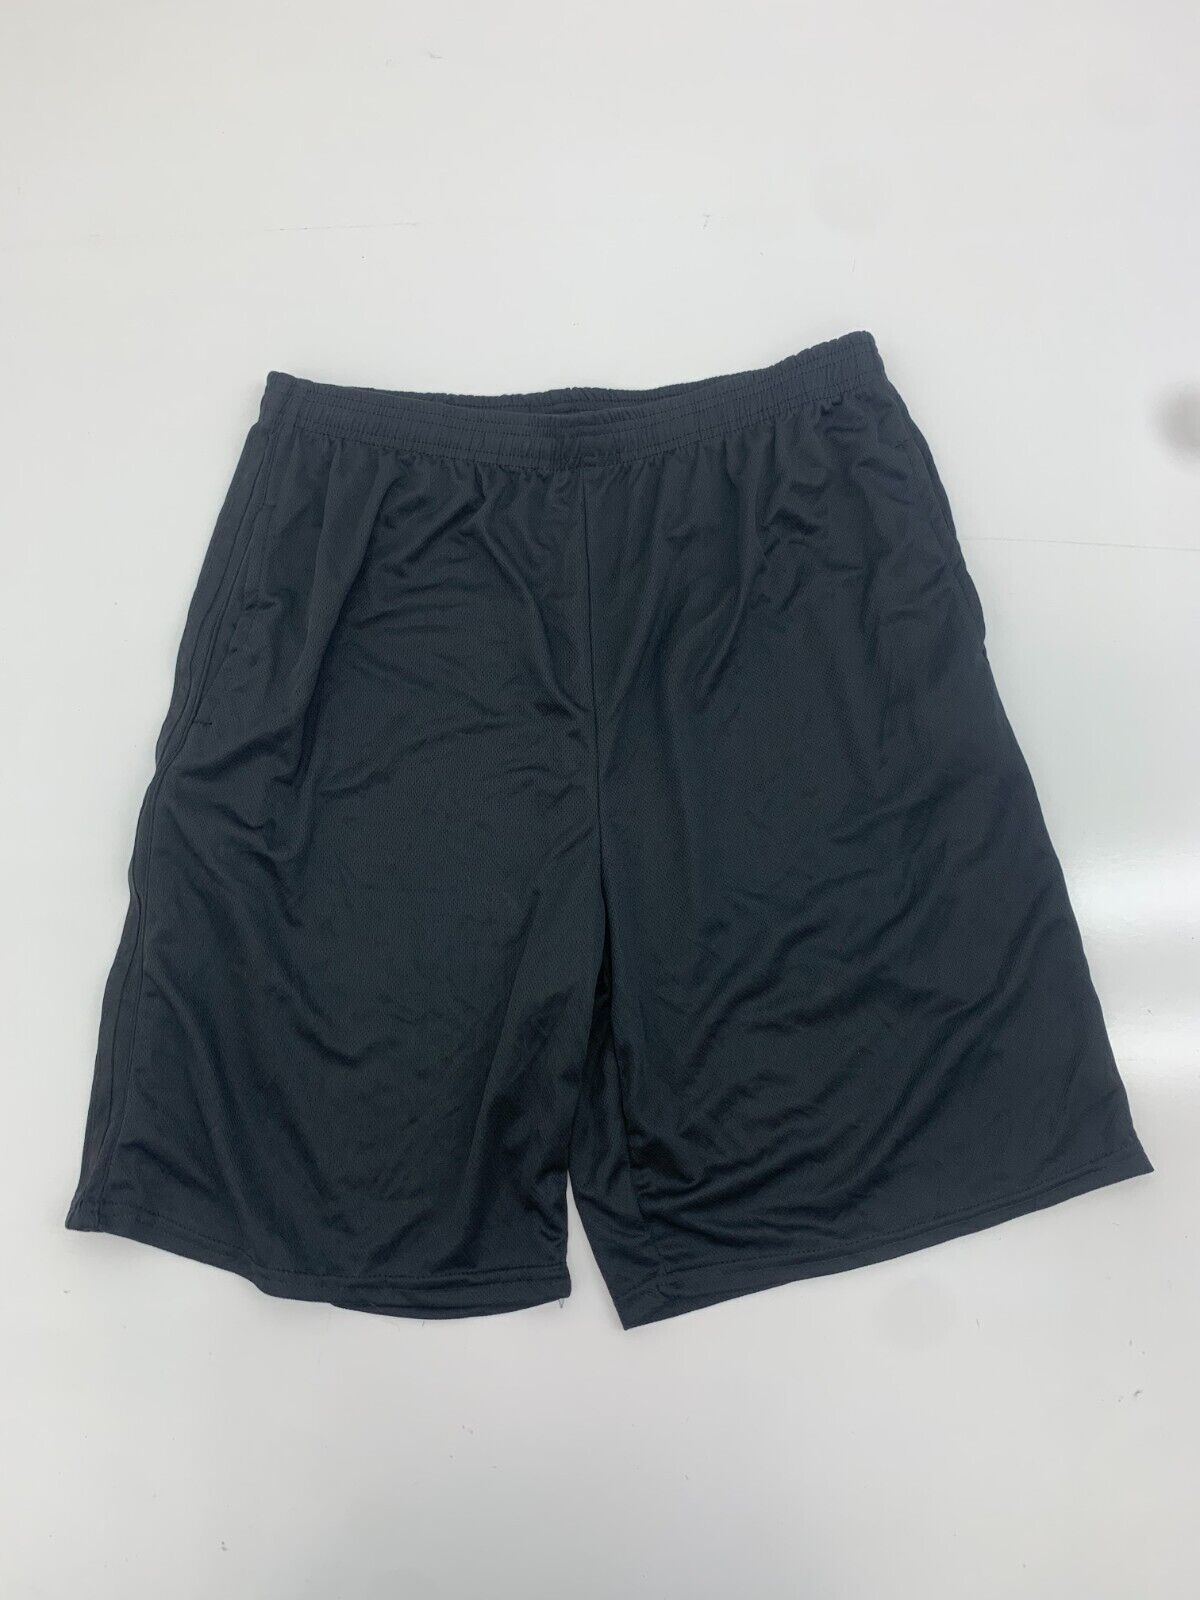 Real Essentials Mens Black Mesh Athletic Shorts Size 2XL